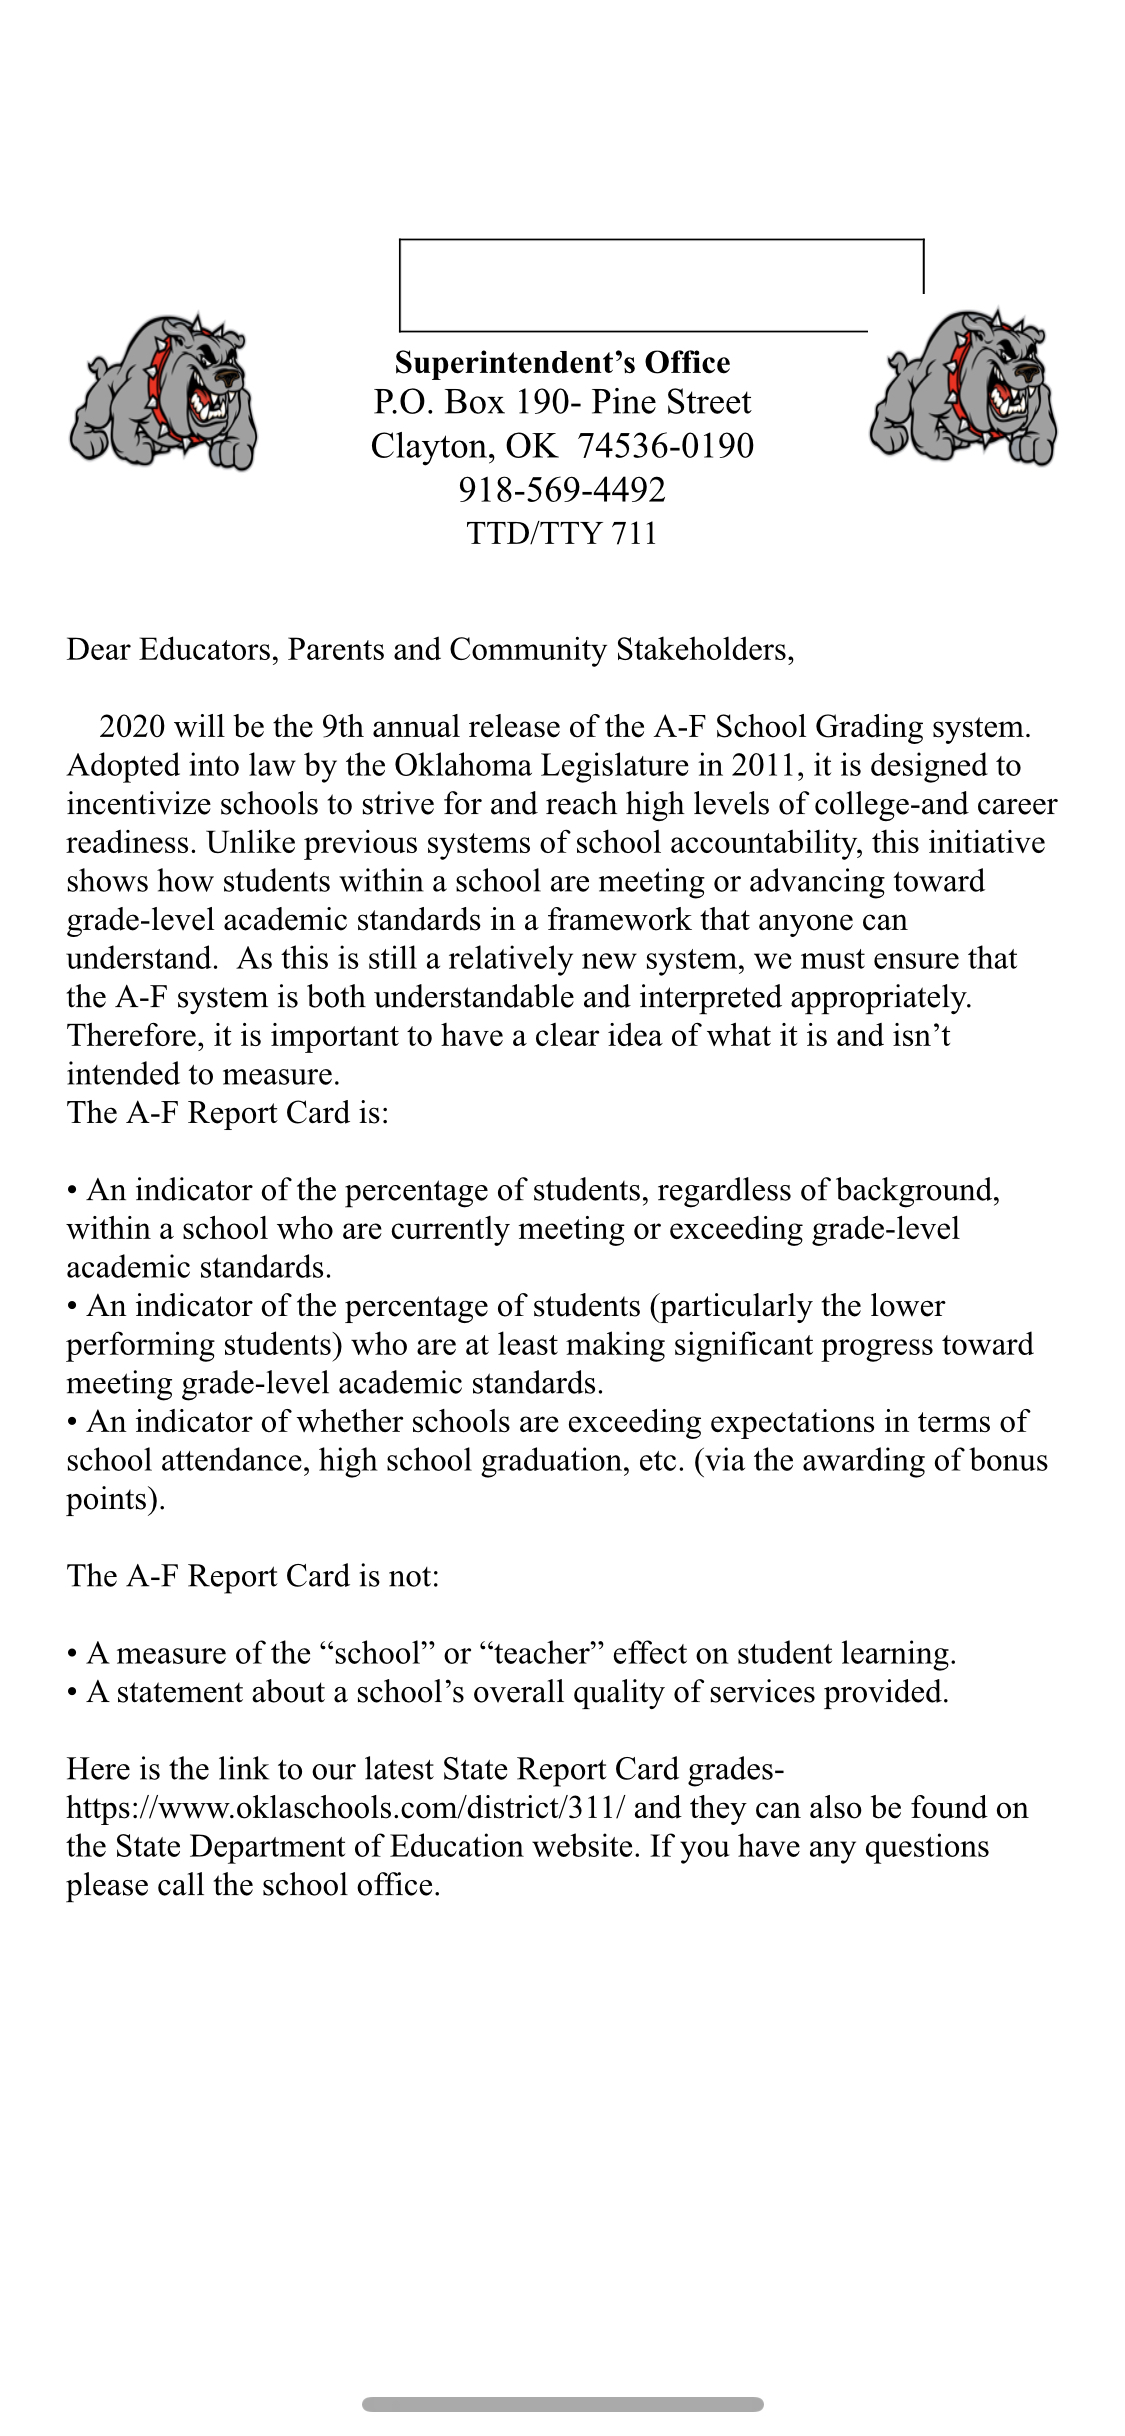 Oklahoma School A-F Report Cards